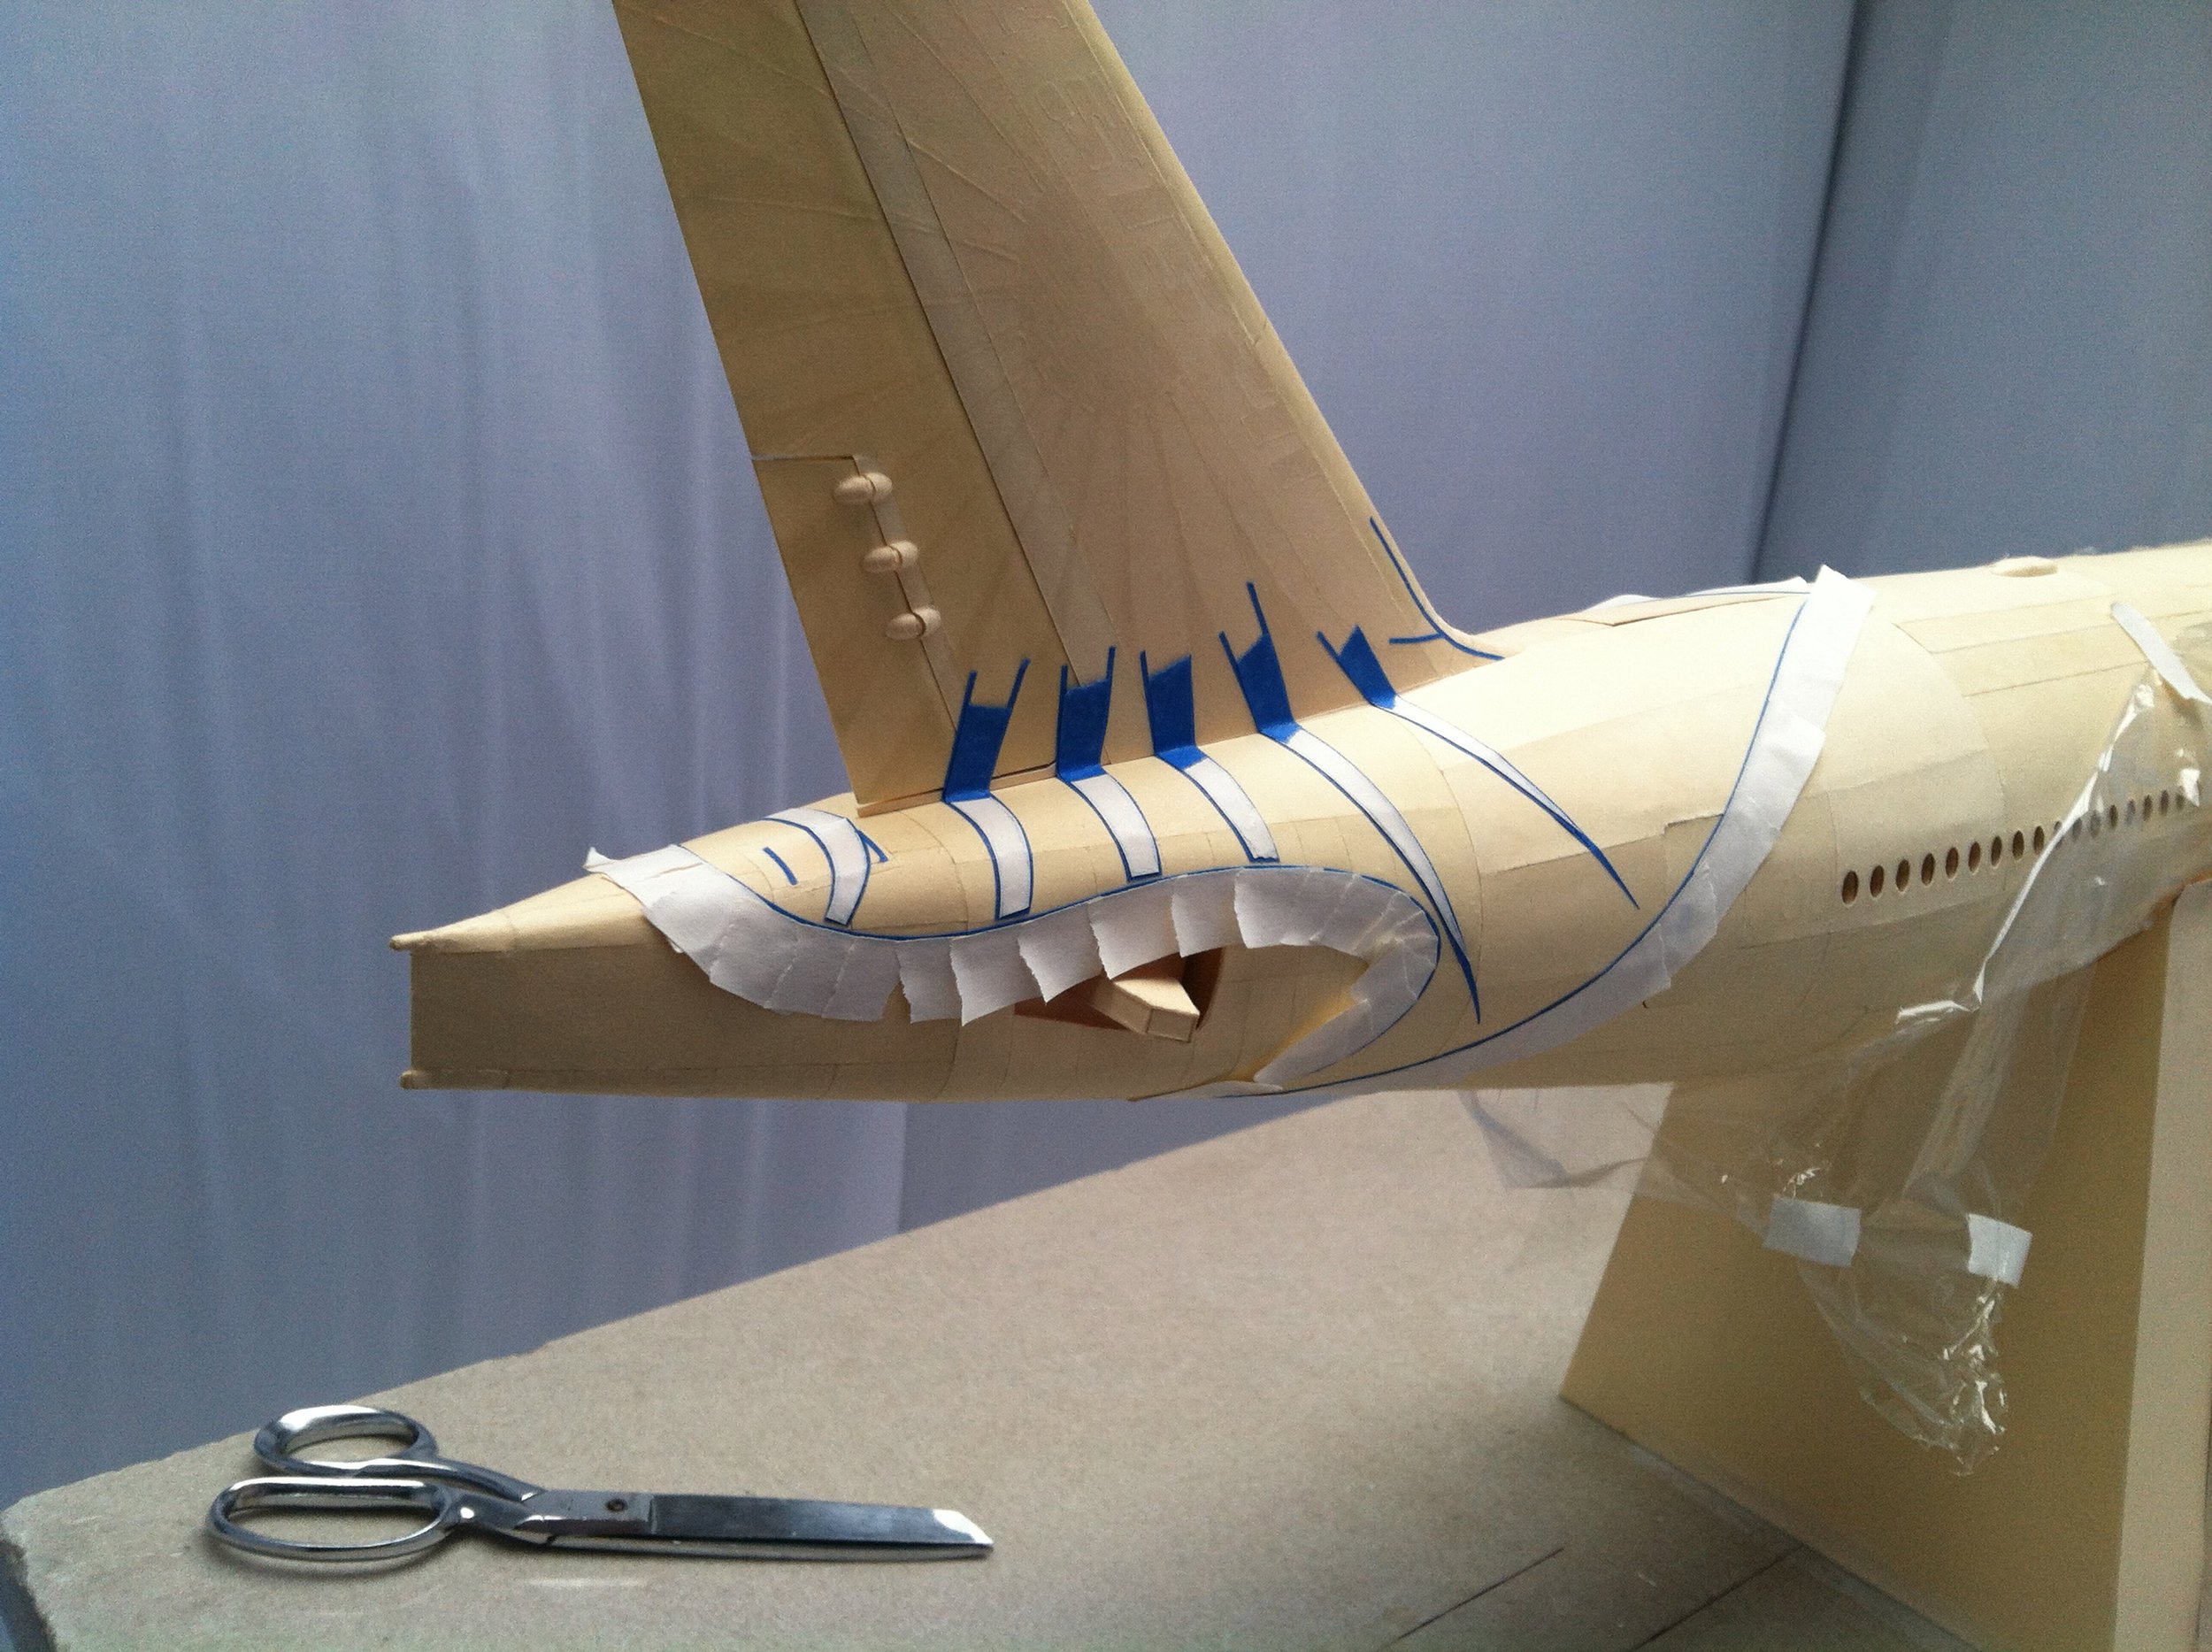 Класс модели самолета